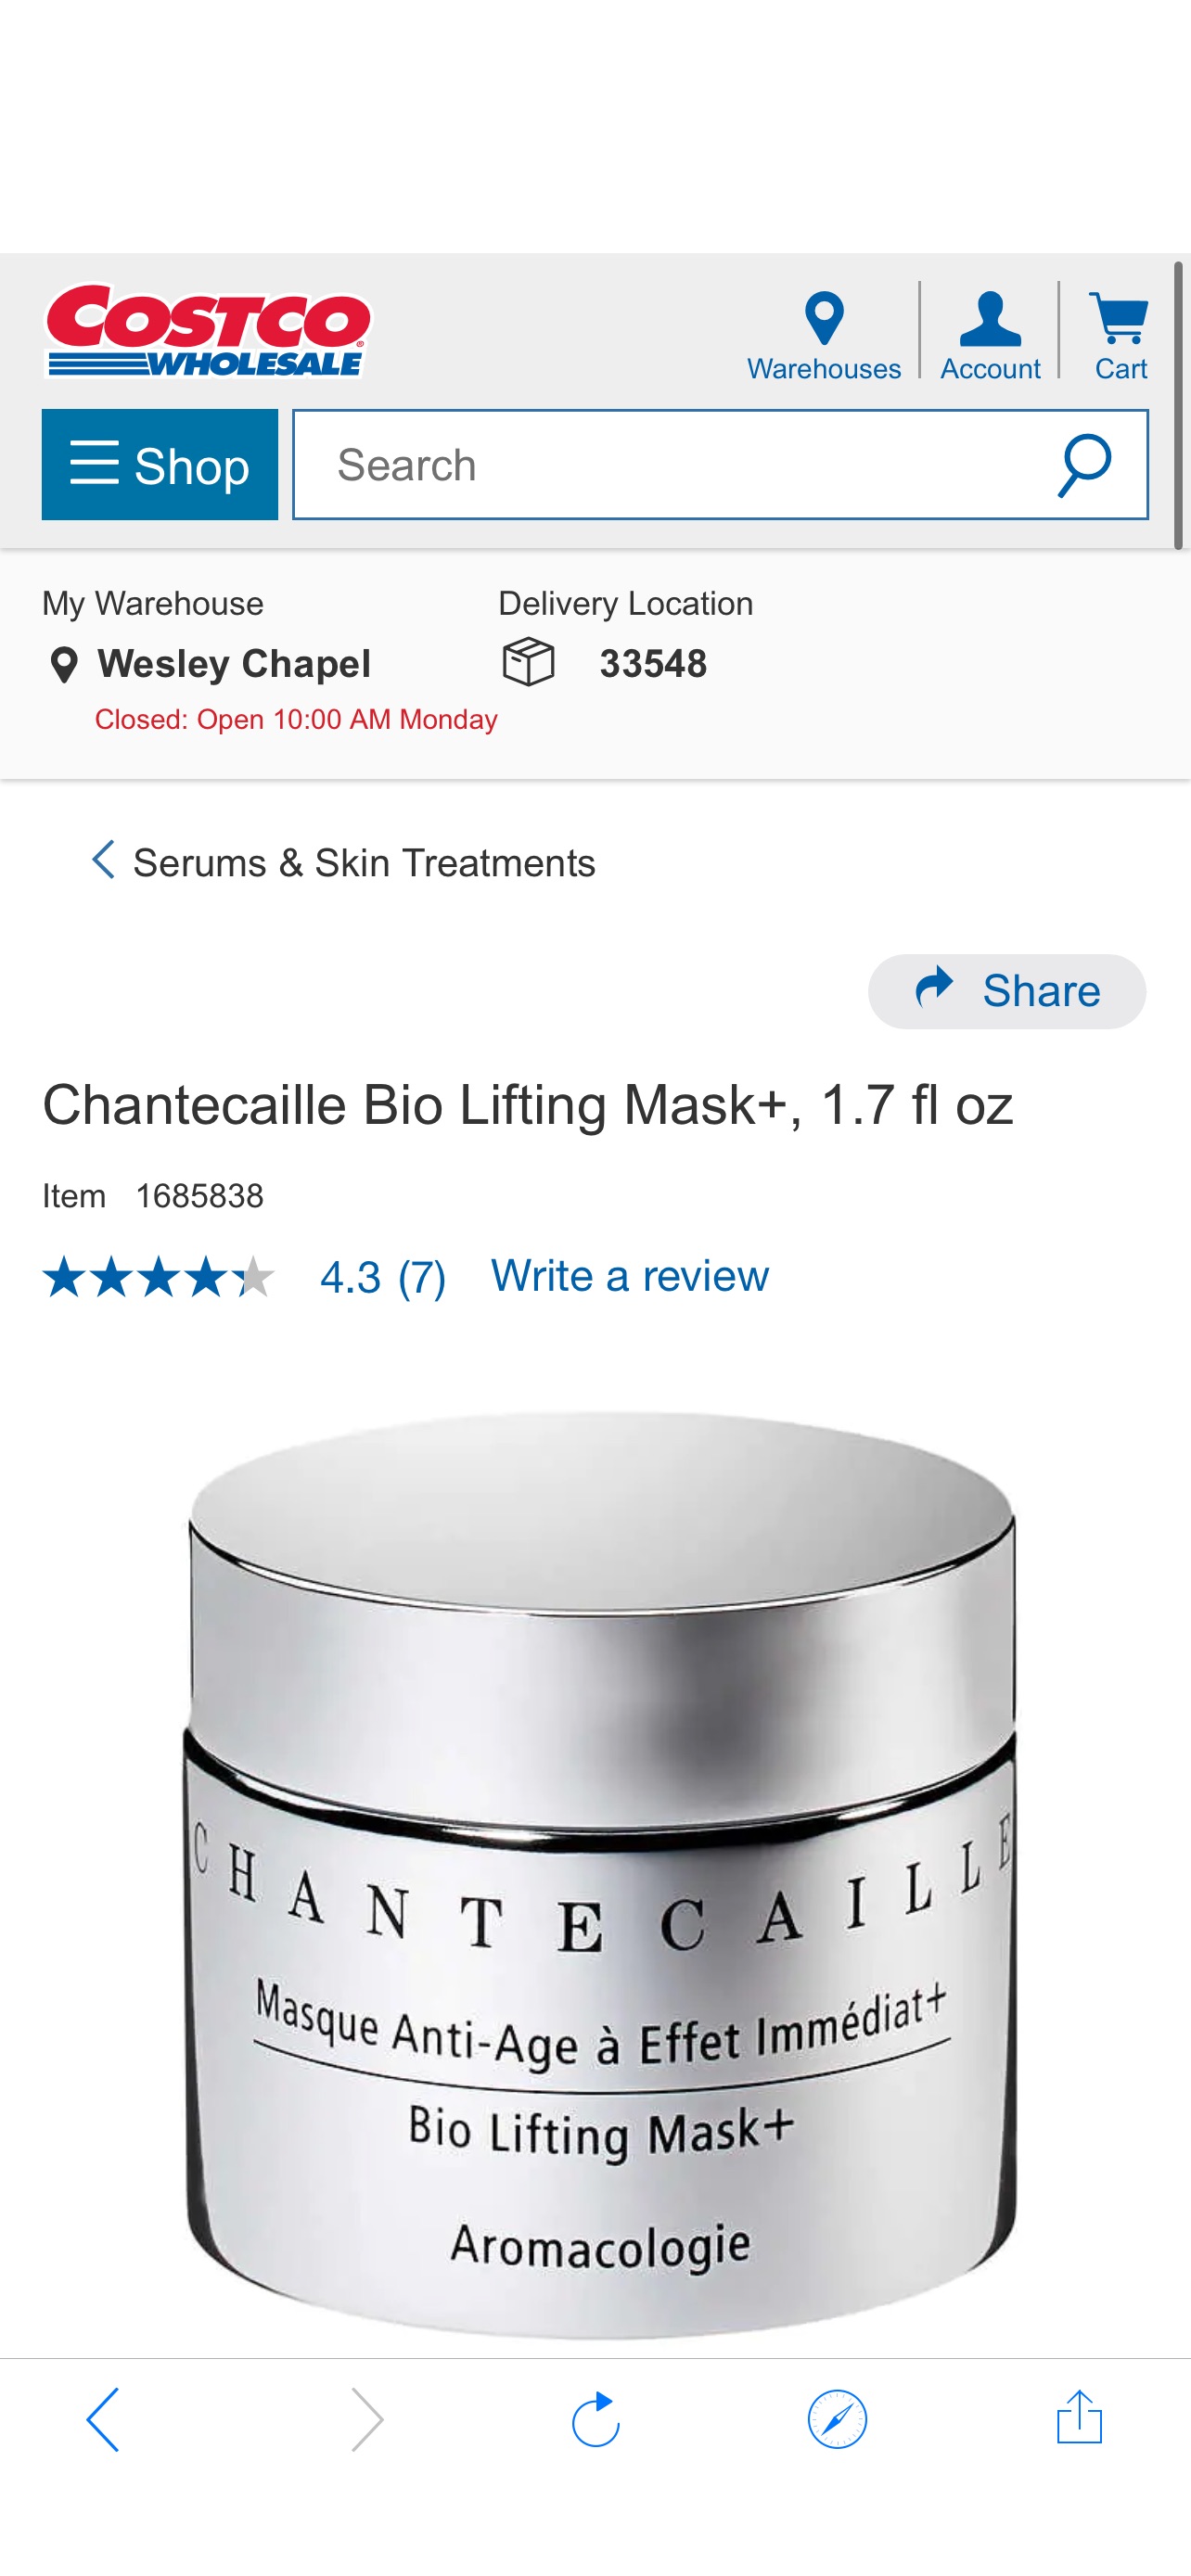 Chantecaille Bio Lifting Mask+, 1.7 fl oz | Costco